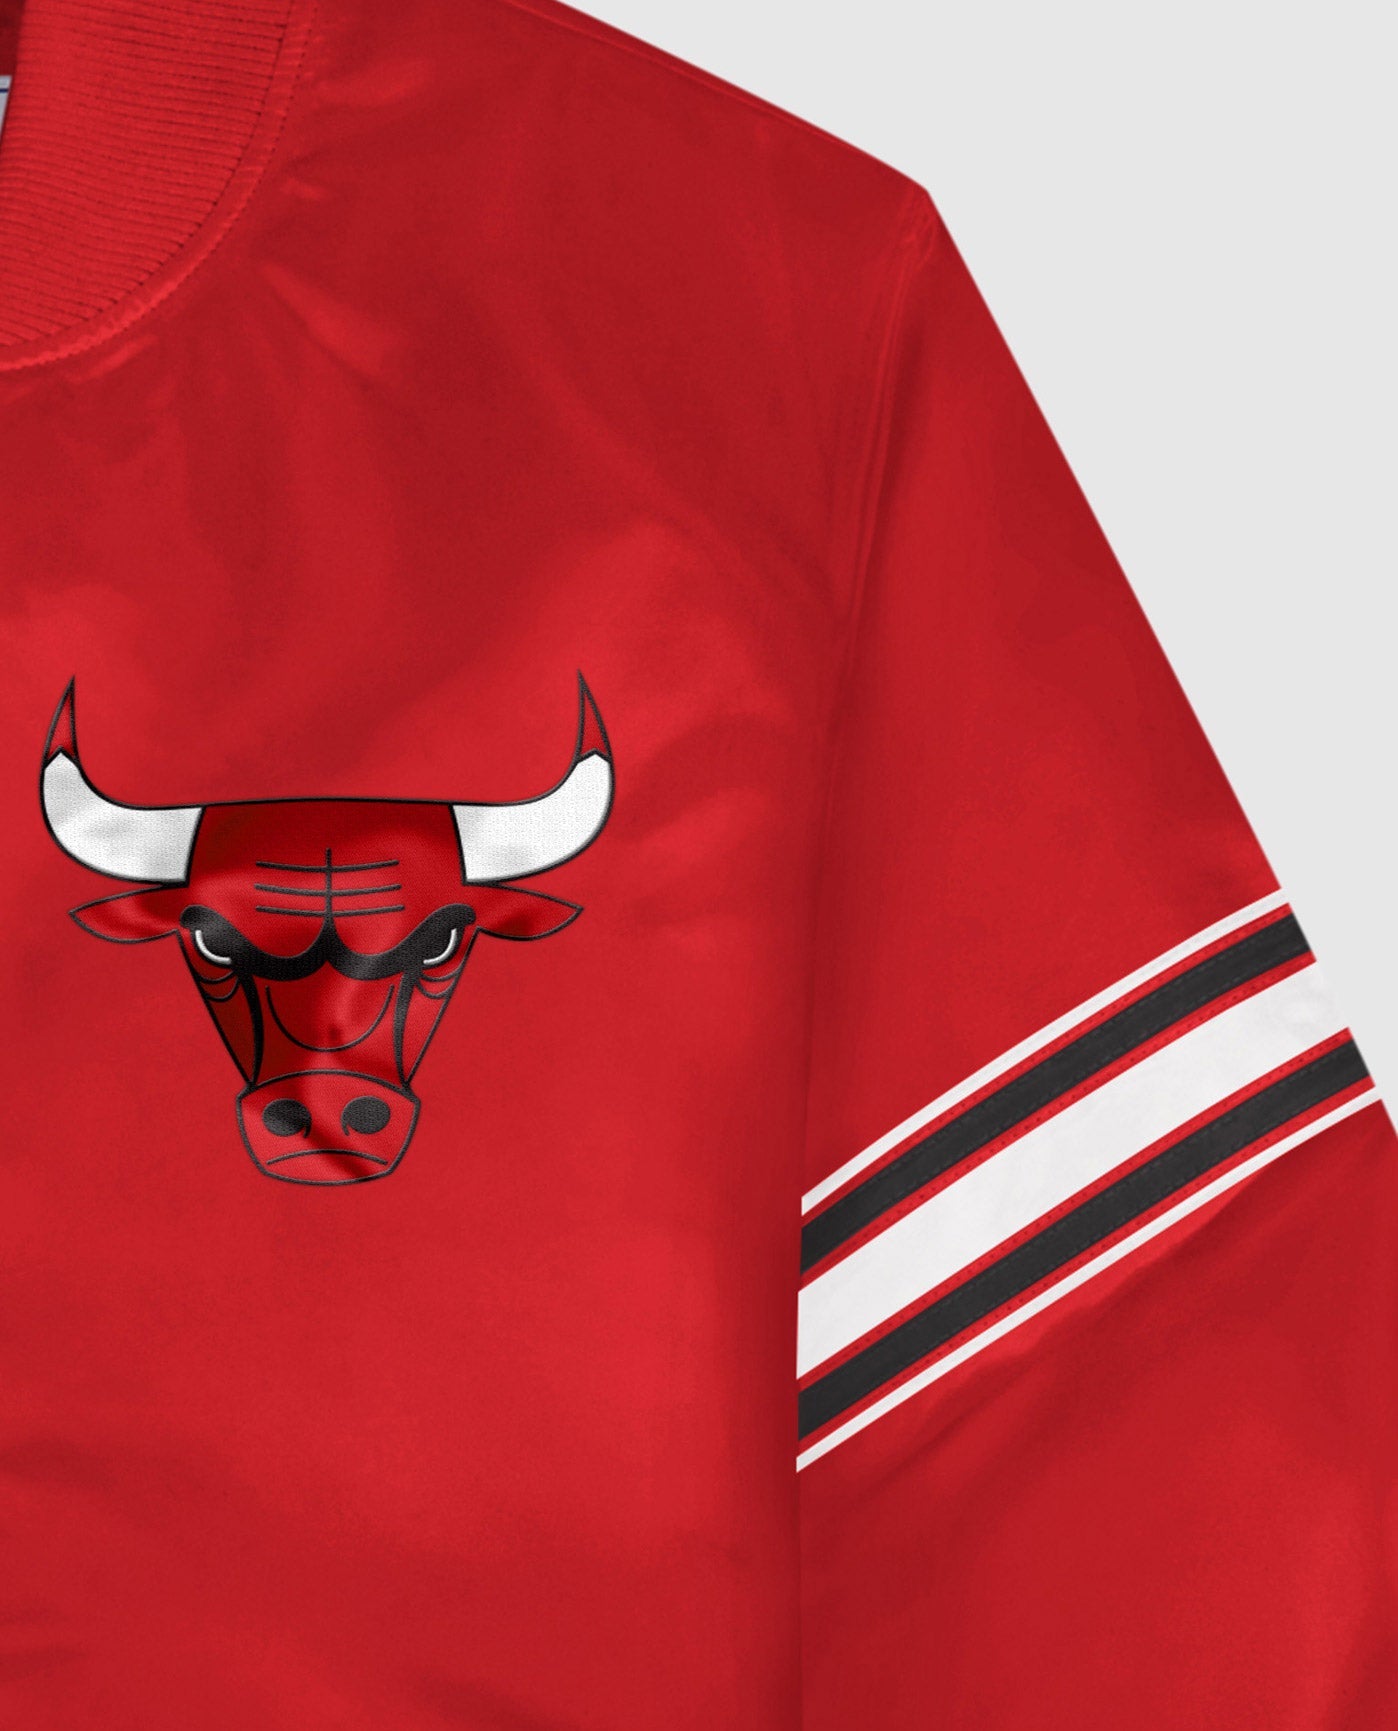 Chicago Bulls Starter Tricolor Remix Raglan Full-Snap Jacket - Black/Red/ White